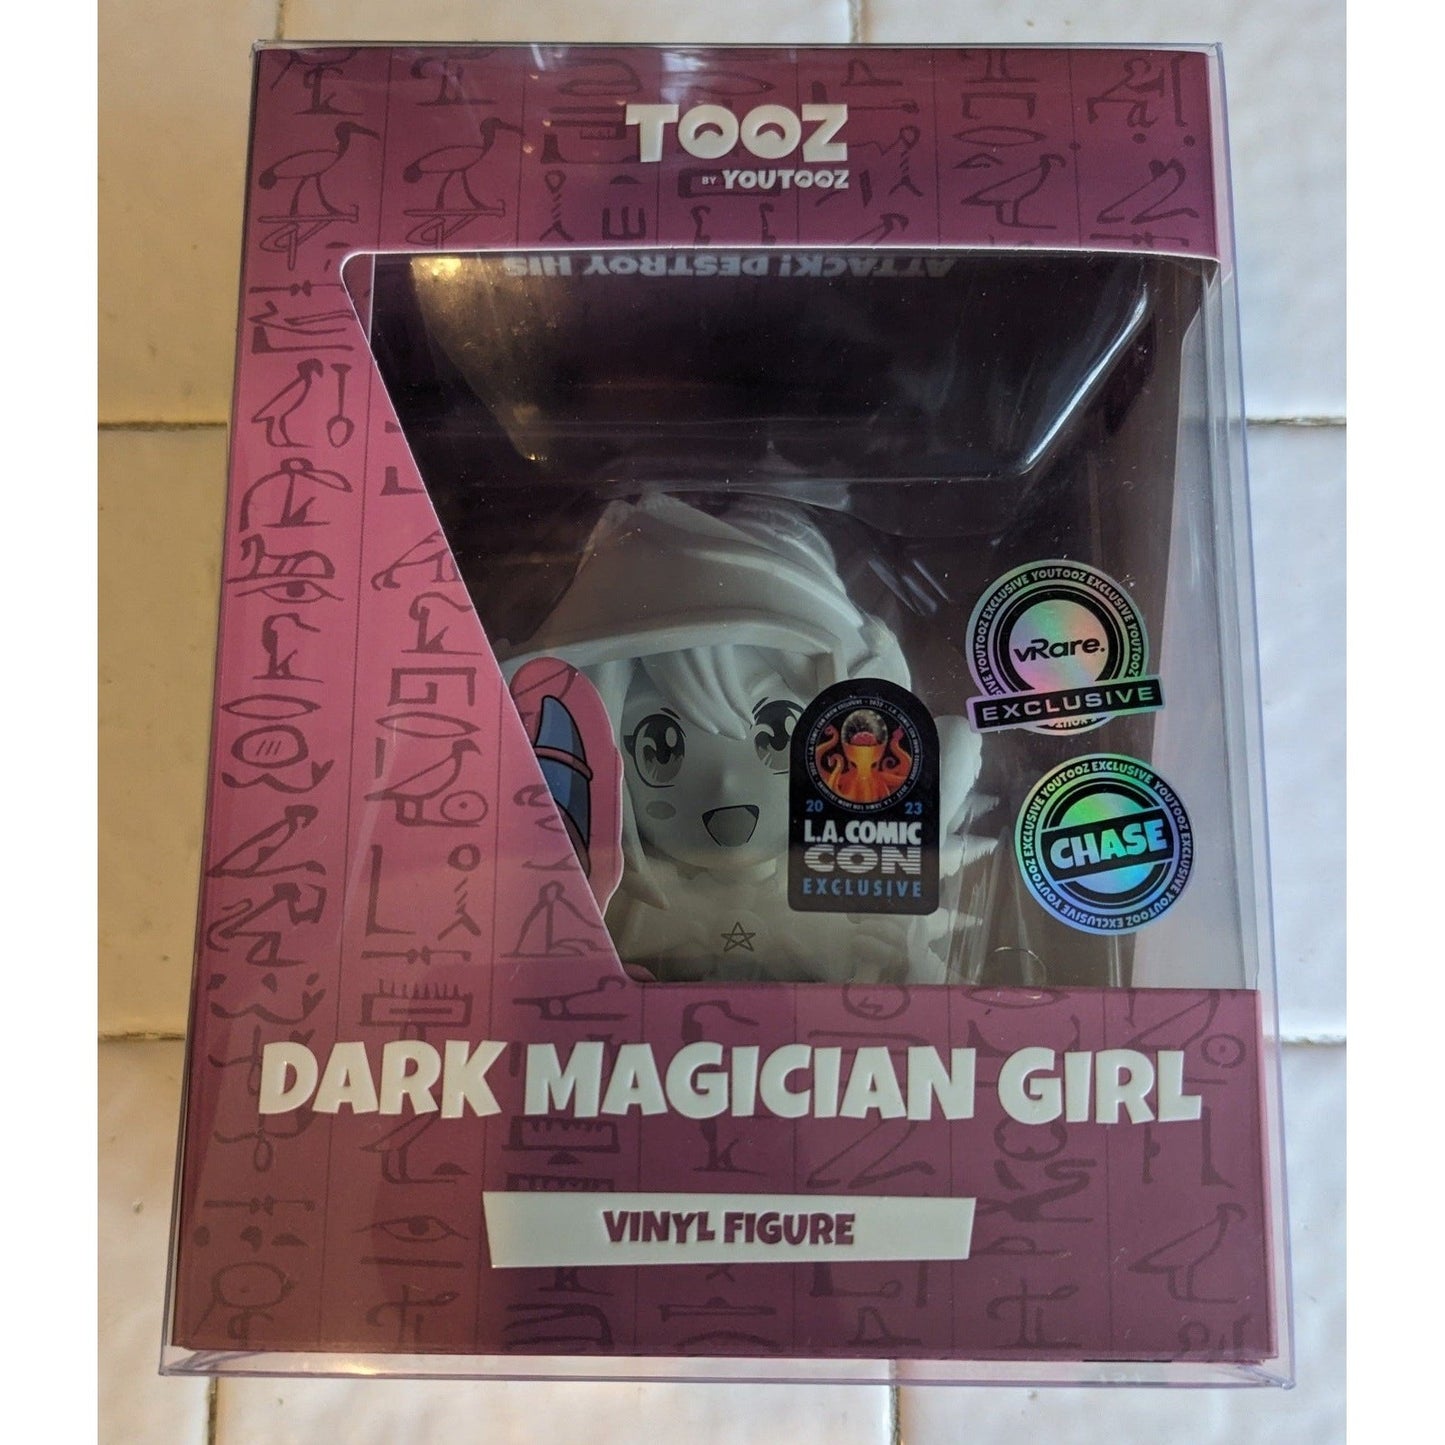 Dark Magician Girl Yu-Gi-Oh Vinyl Ghost Rare CHASE Figure - VRARE LACC Exclusive